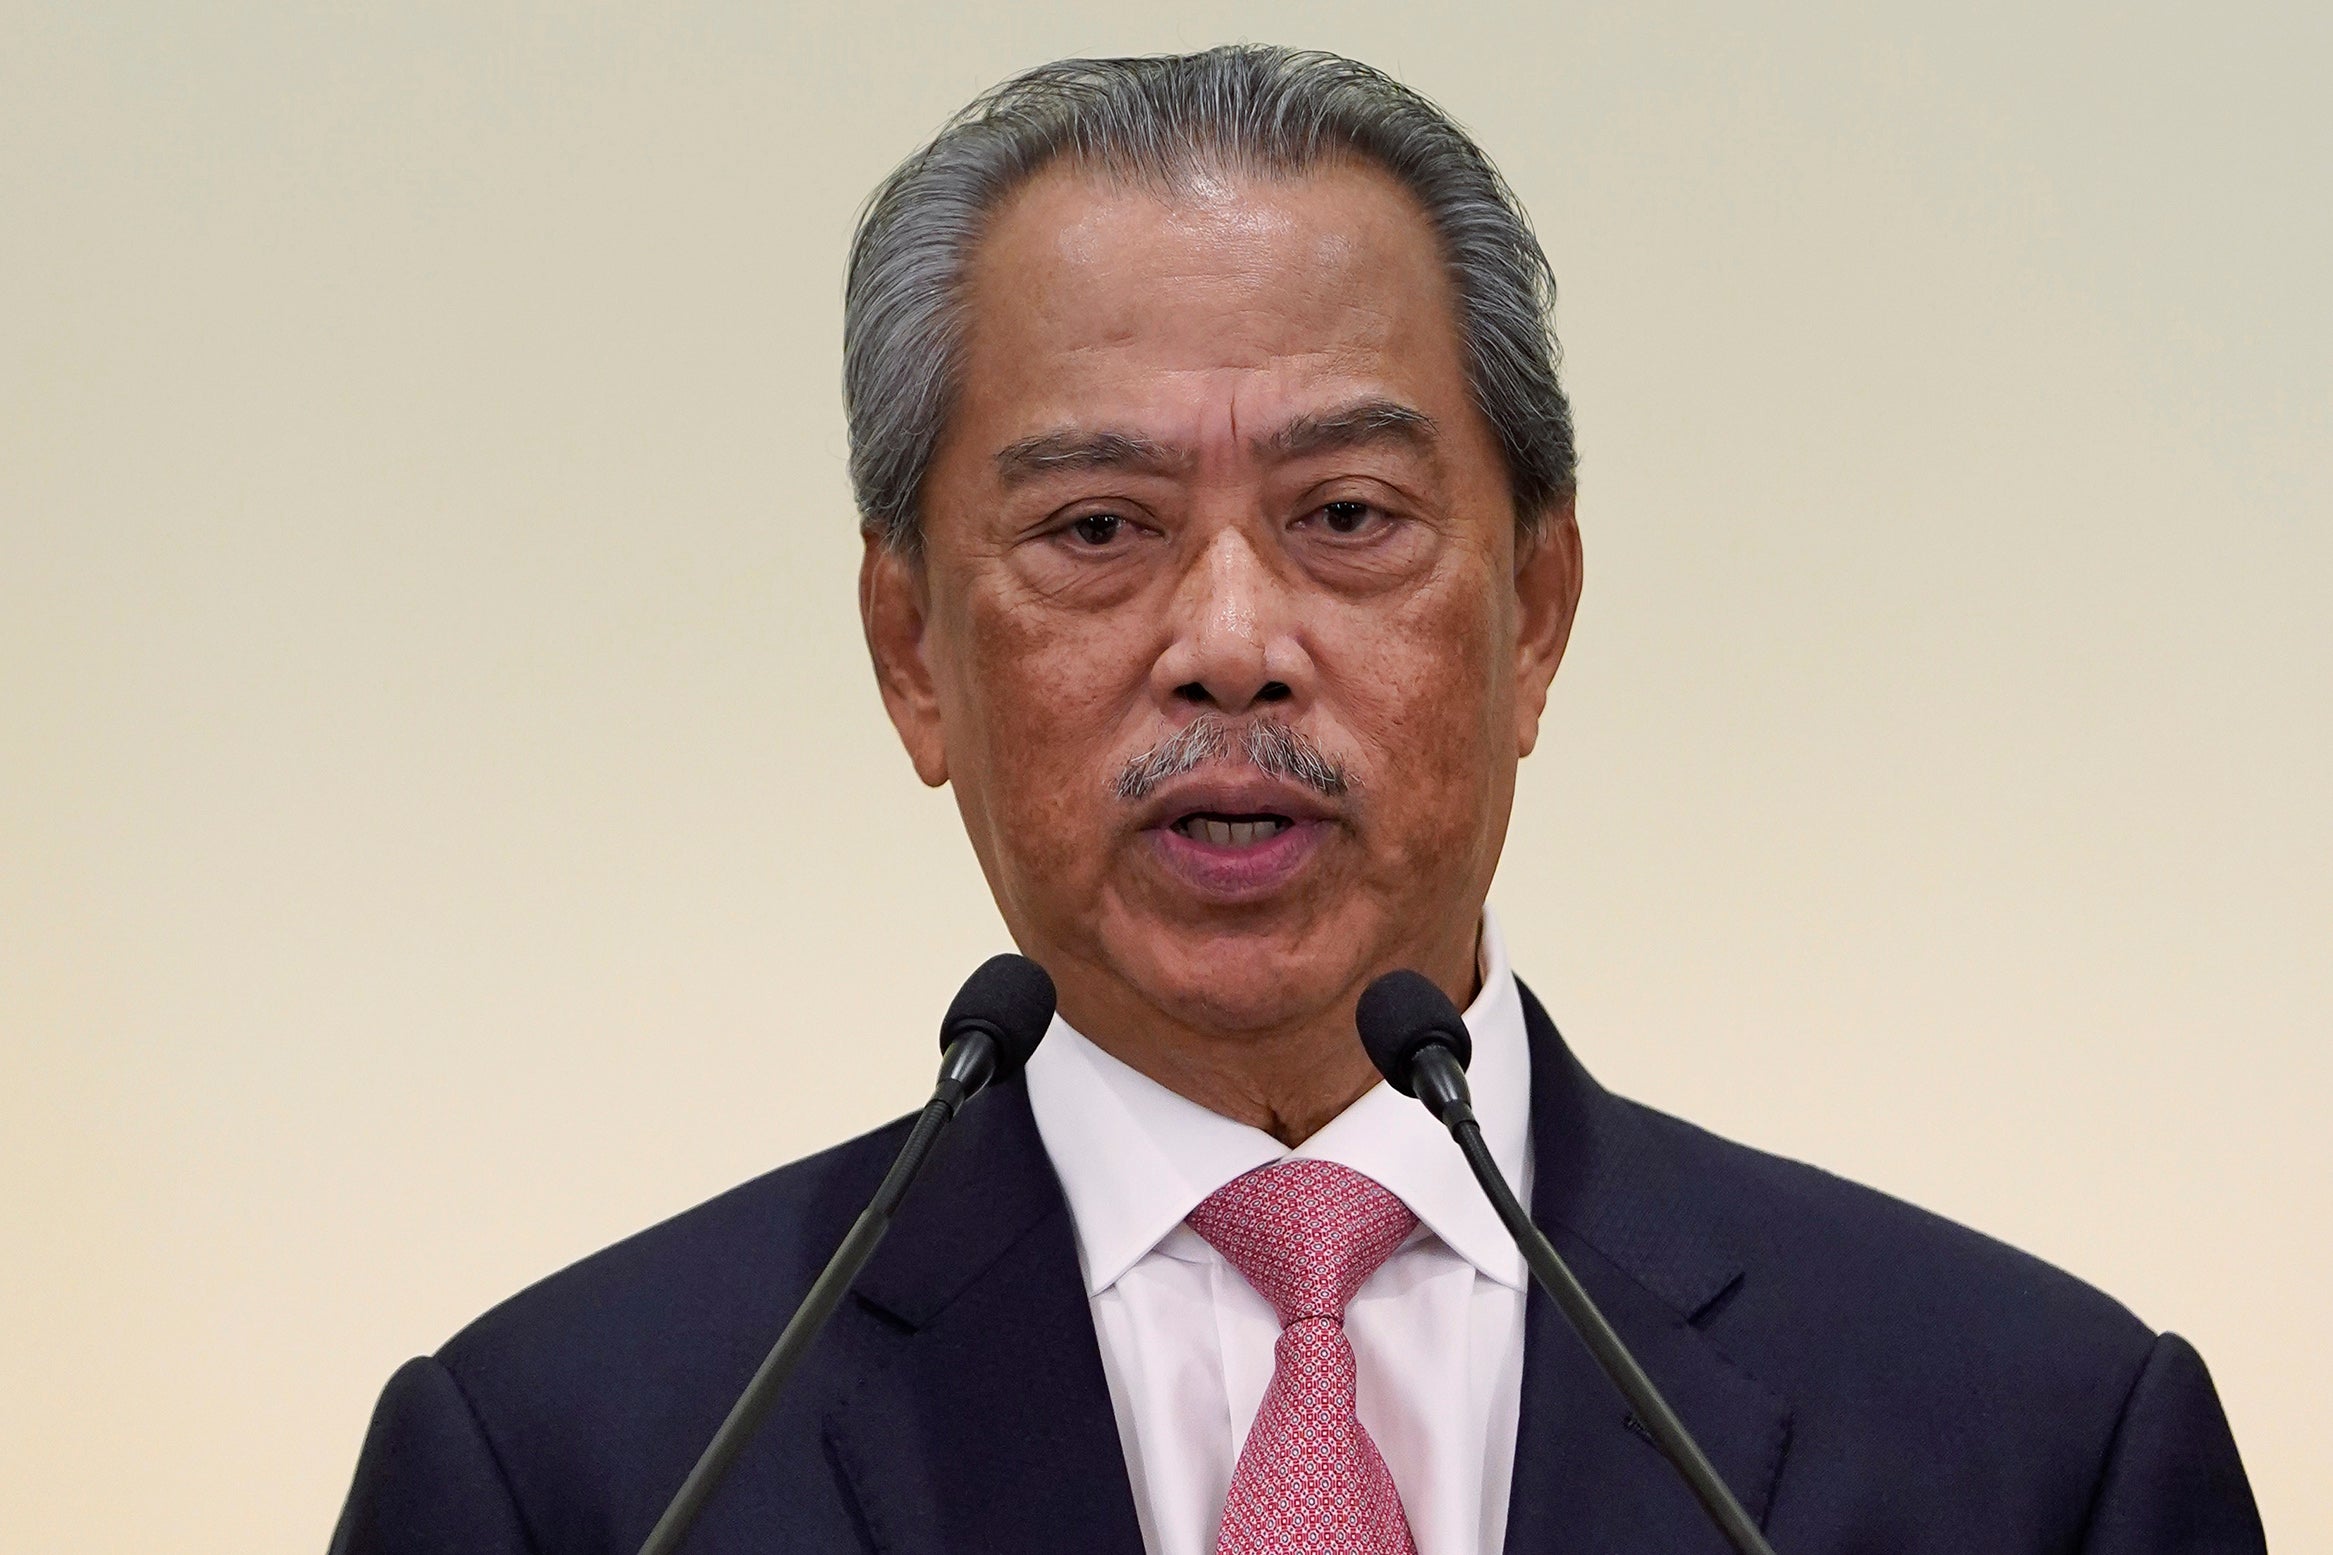 Perdana Menteri Malaysia Muhyiddin Yassin berbicara dalam sebuah konferensi pers setelah pertemuan kabinet pertama di kantor perdana menteri di Putrajaya, Malaysia, 11 Maret 2020. 